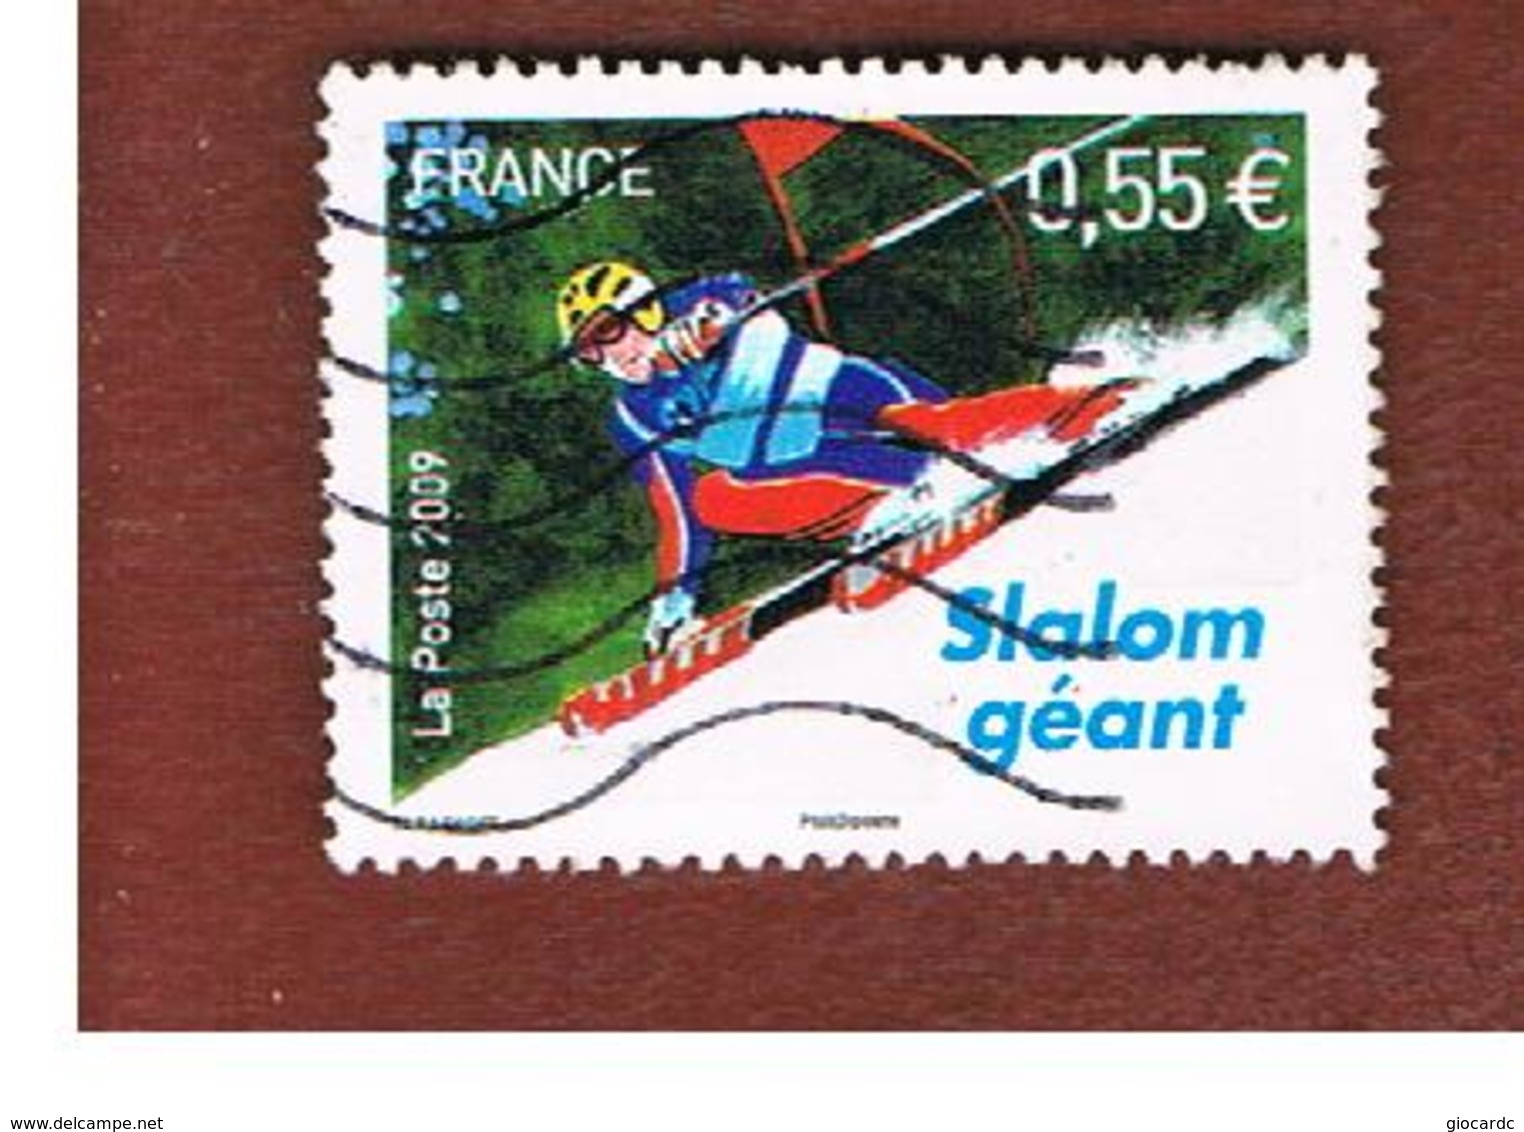 FRANCIA (FRANCE) -  YV 4332  -           2009   WORLD SKI CHAMPIONSHIP    - USED - Used Stamps